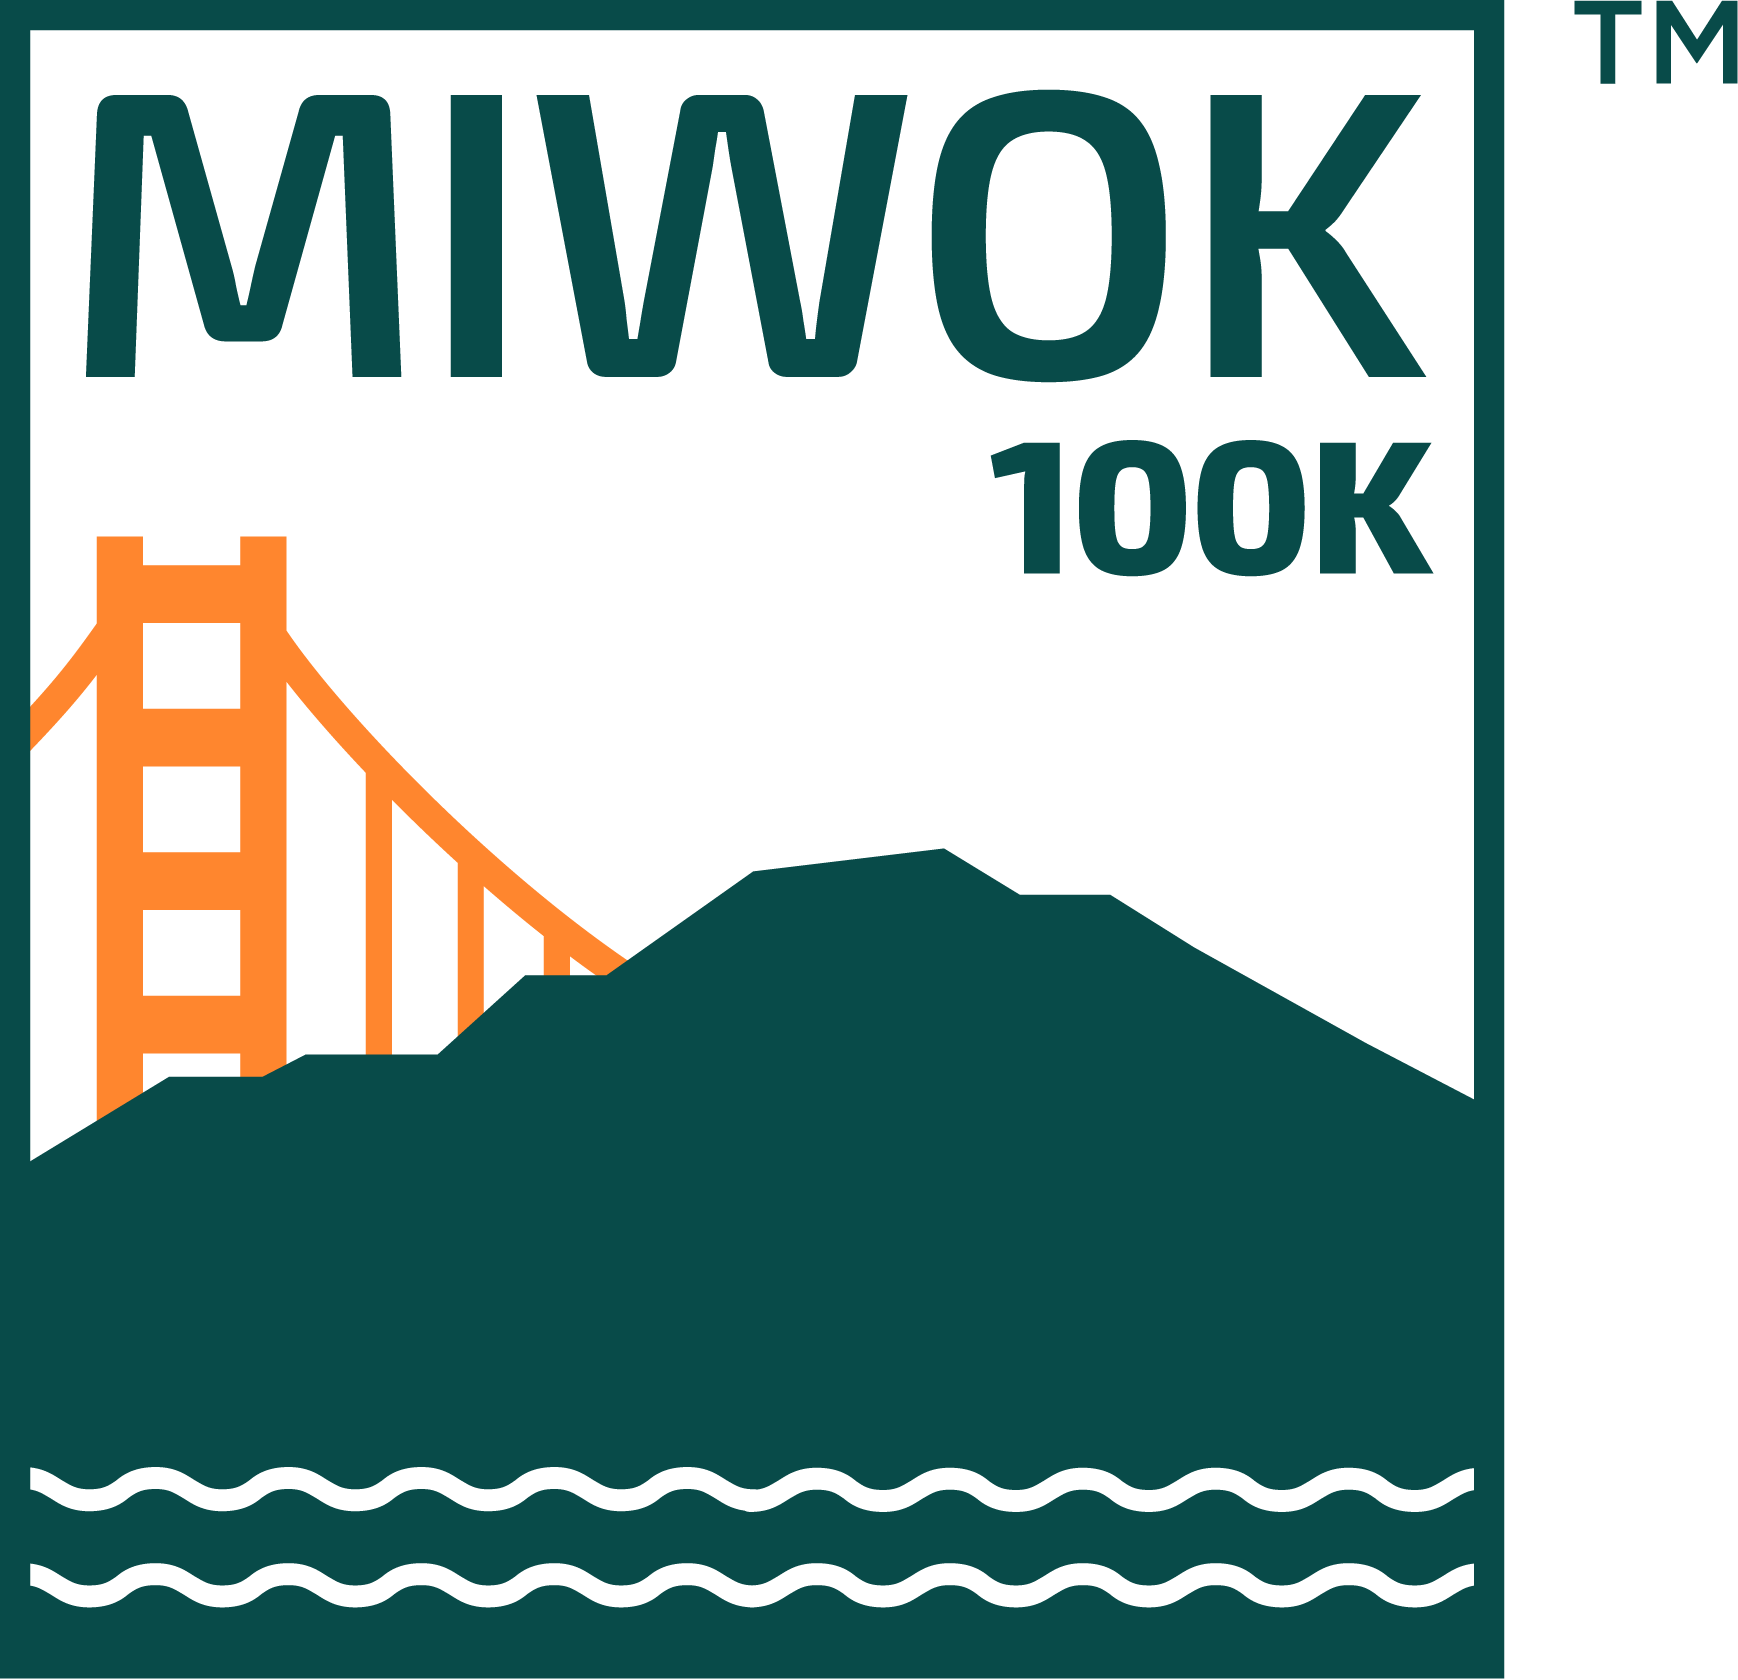 Miwok 100K Ultramarathon runner on the Marin County coast of California